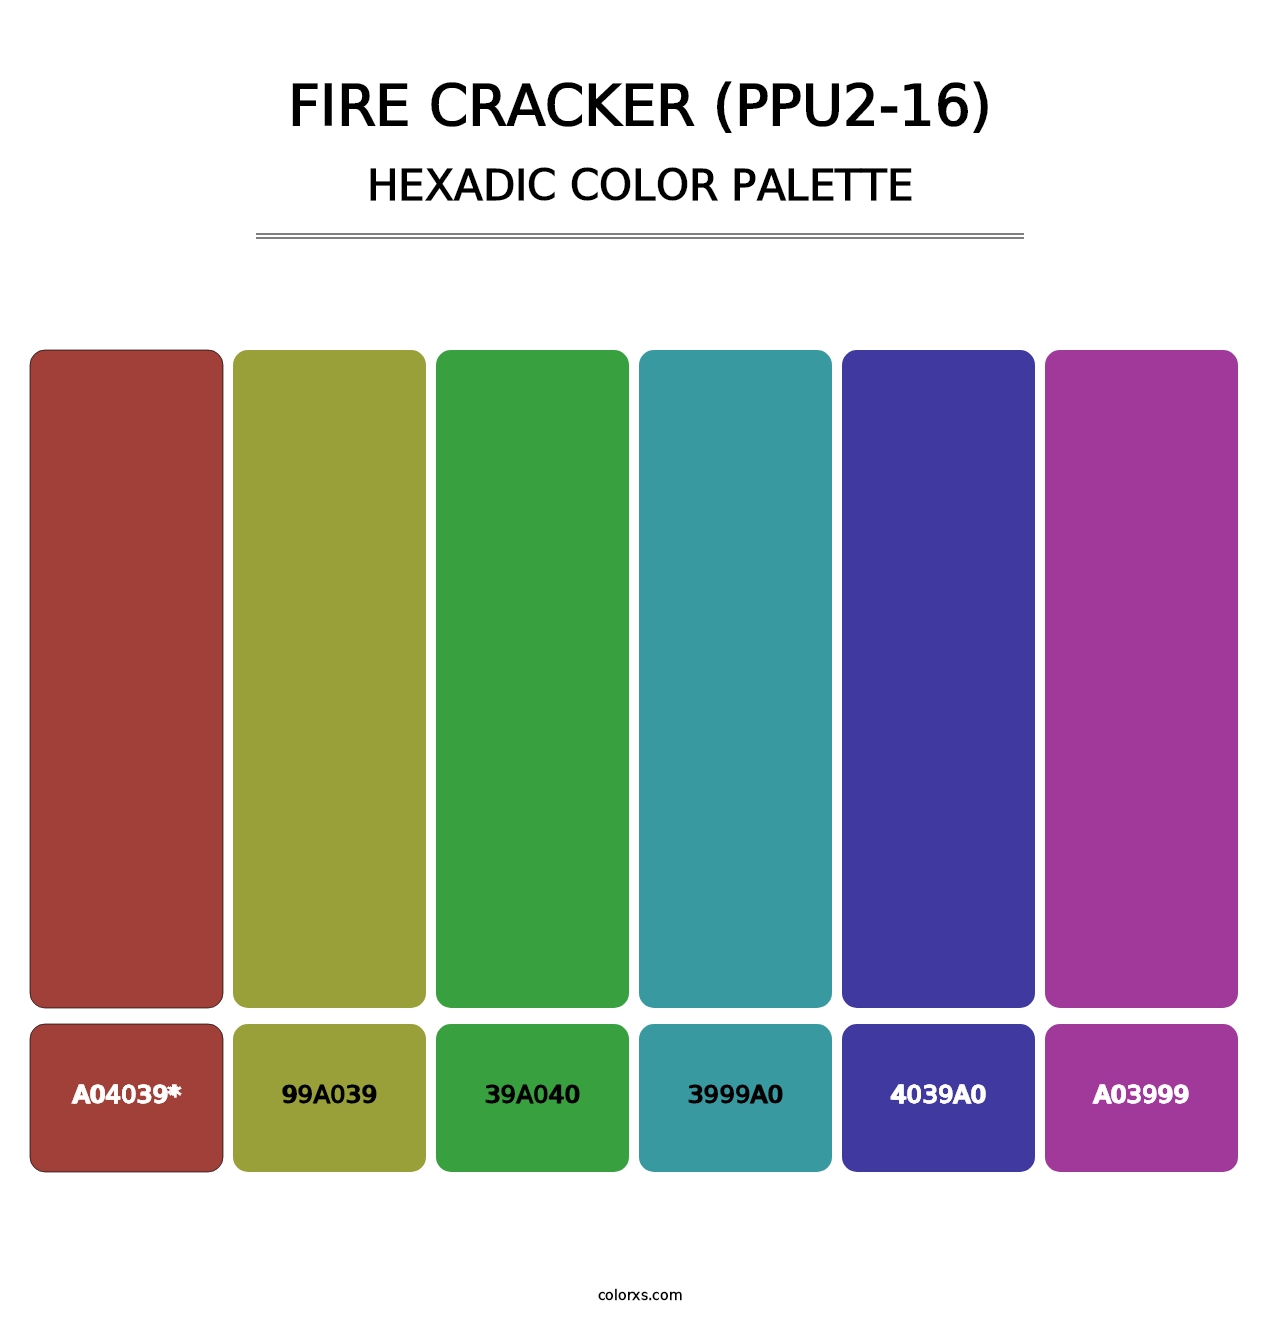 Fire Cracker (PPU2-16) - Hexadic Color Palette